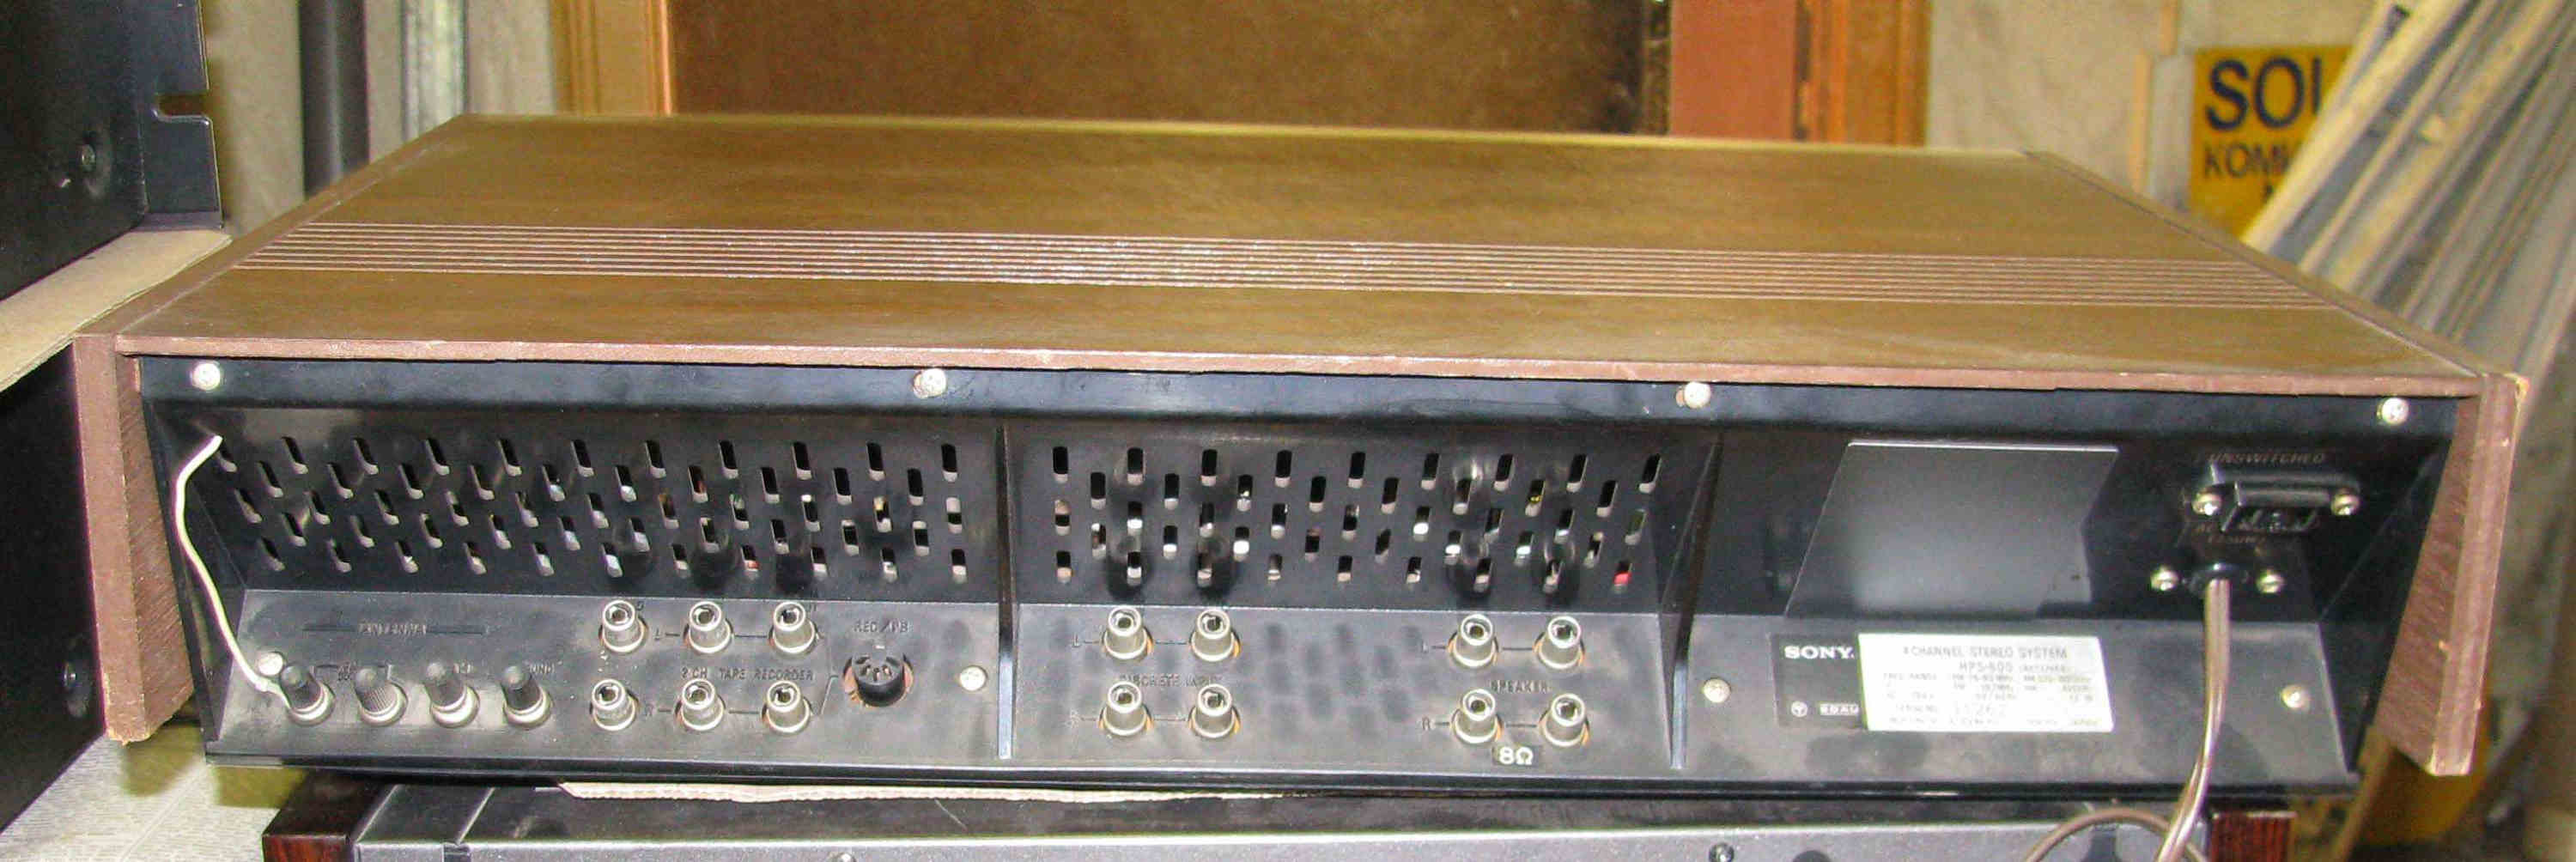 vintage hi-fi receiver Sony HPS-600